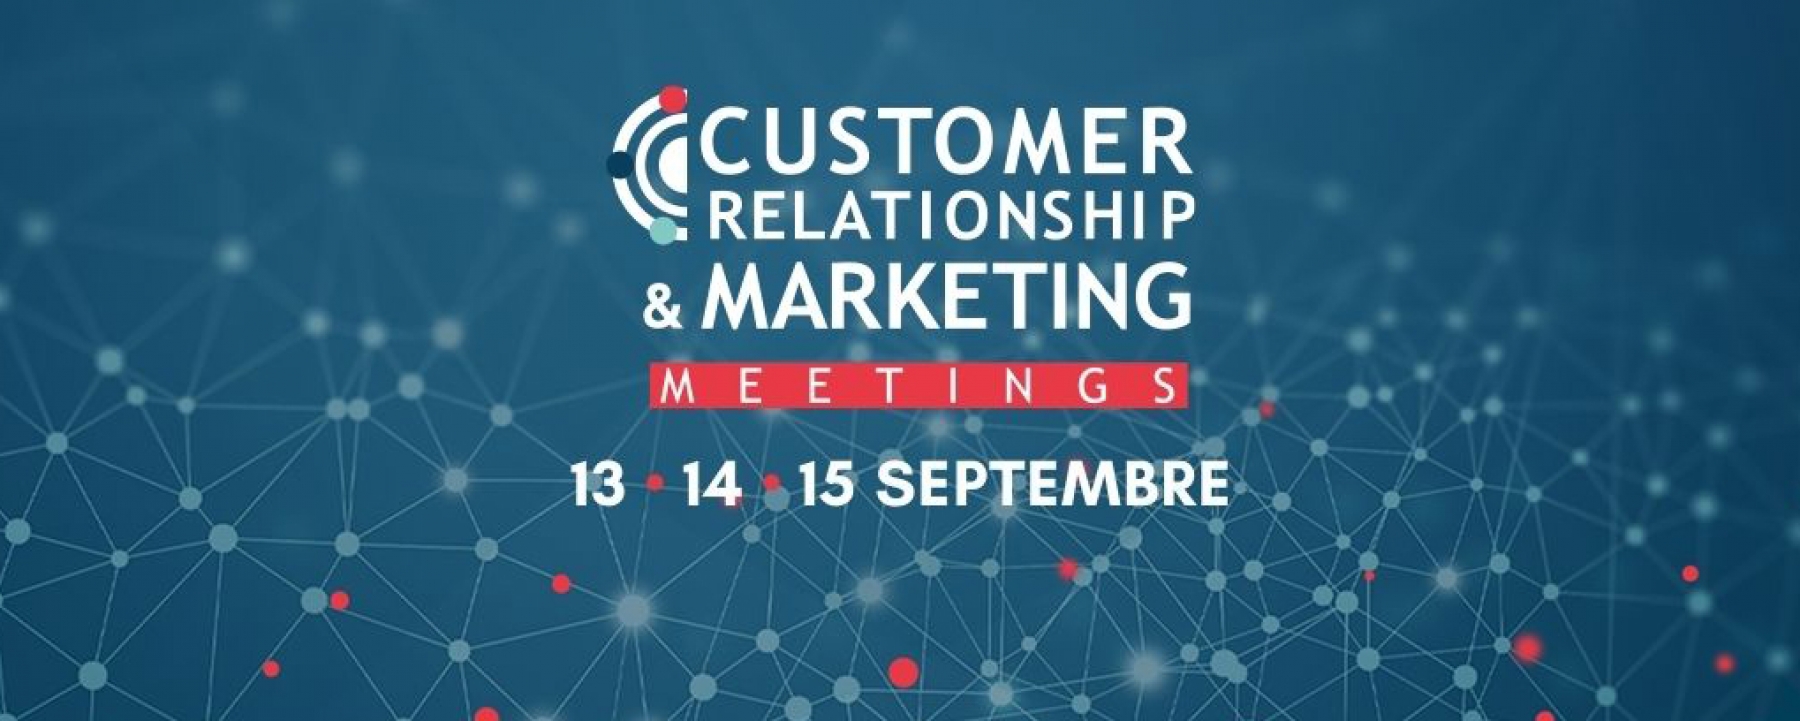 Customer Relationship & Marketing Meetings, du 13 au 15 septembre 2021